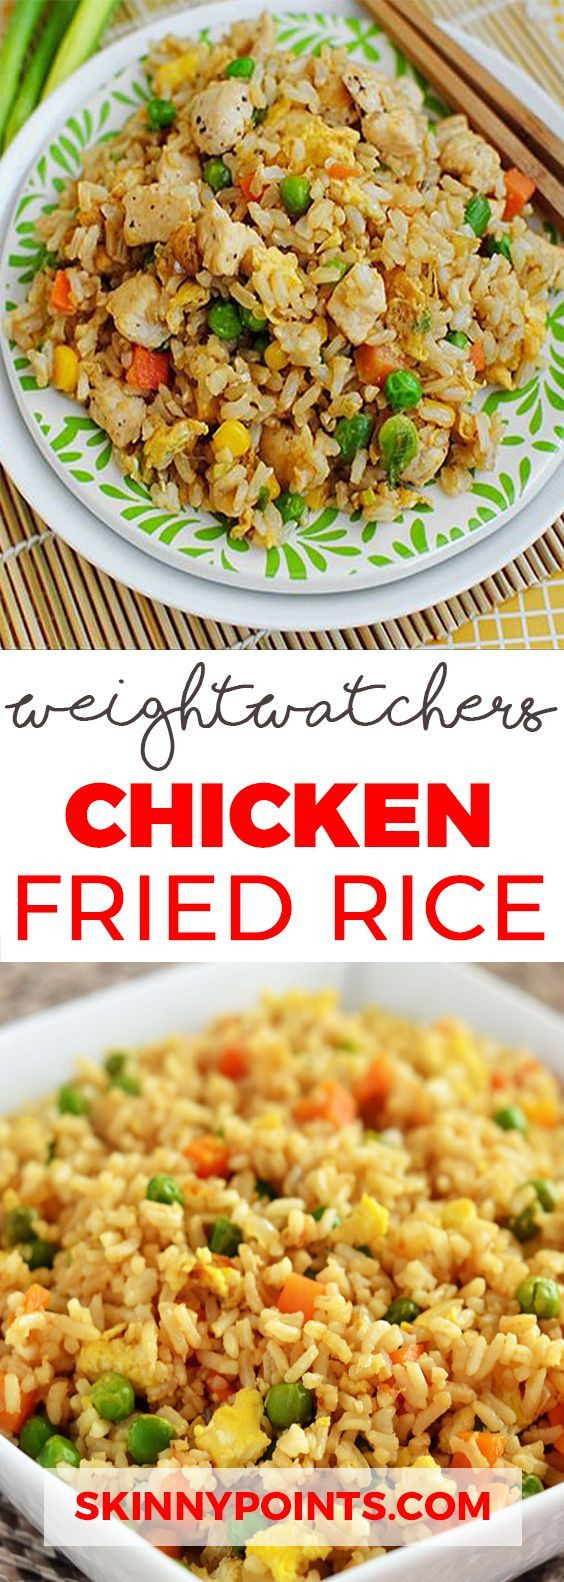 Weight Watchers Chicken Fried Rice
 Pin on weight watchers